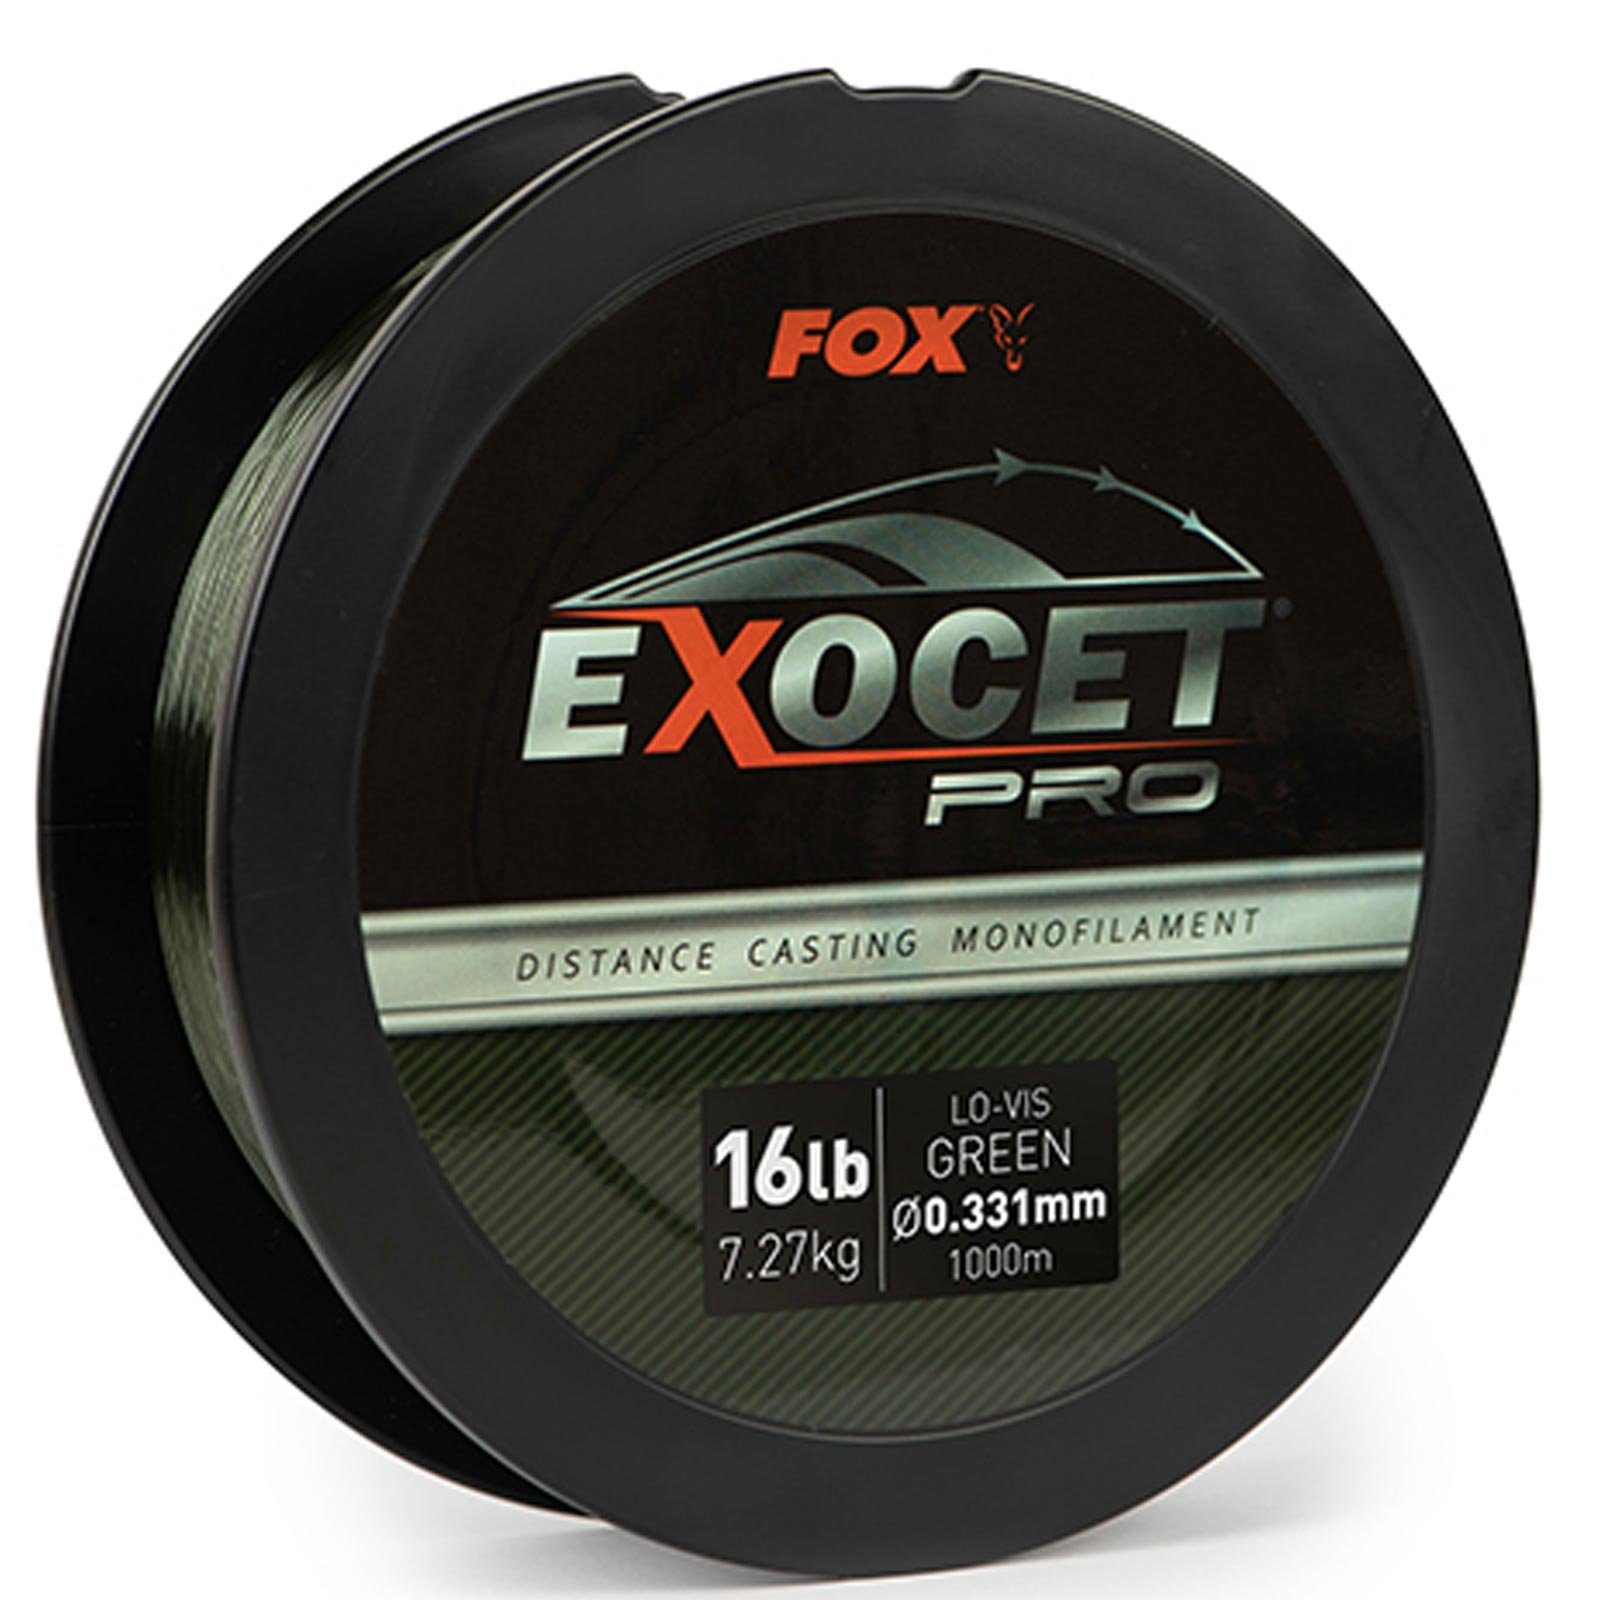 Angelschnur, Fox m 7.27kgs Fox Lo-Vis 0.331mm Green Monofilament Angelschnur (1000m)Monofile / 16lbs Pro 1000 Exocet Länge,